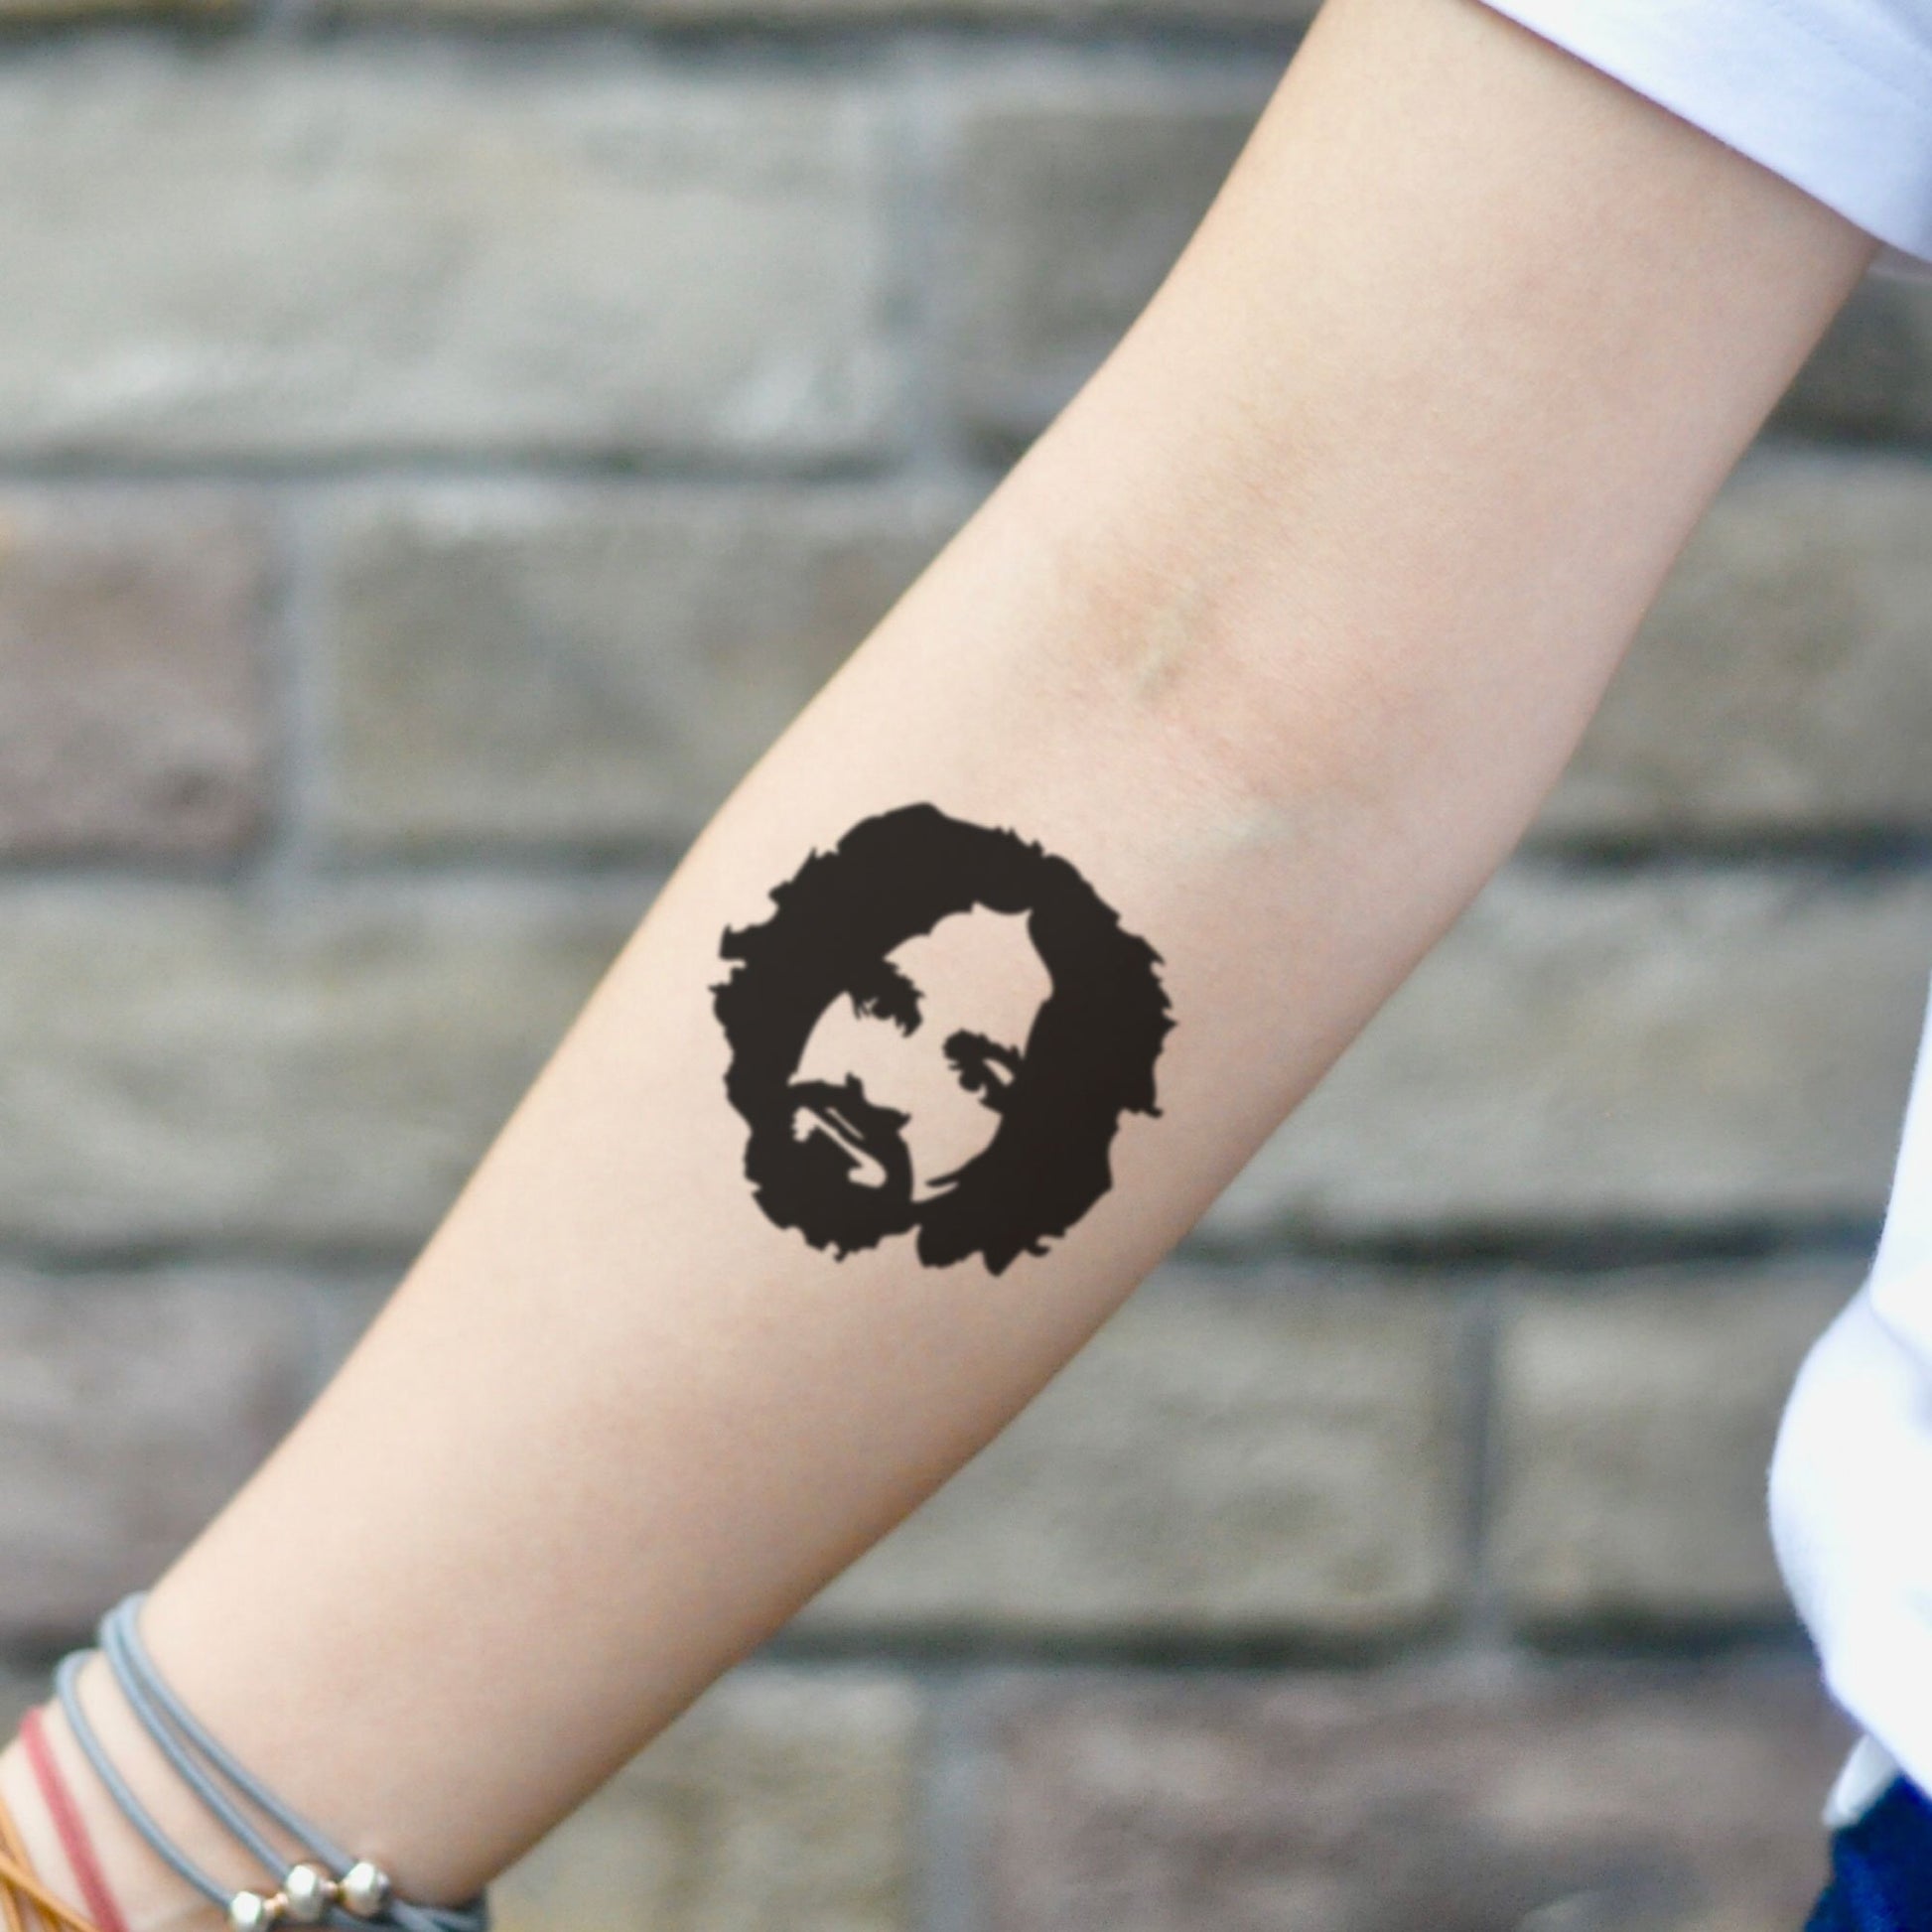 fake small charles manson portrait temporary tattoo sticker design idea on inner arm